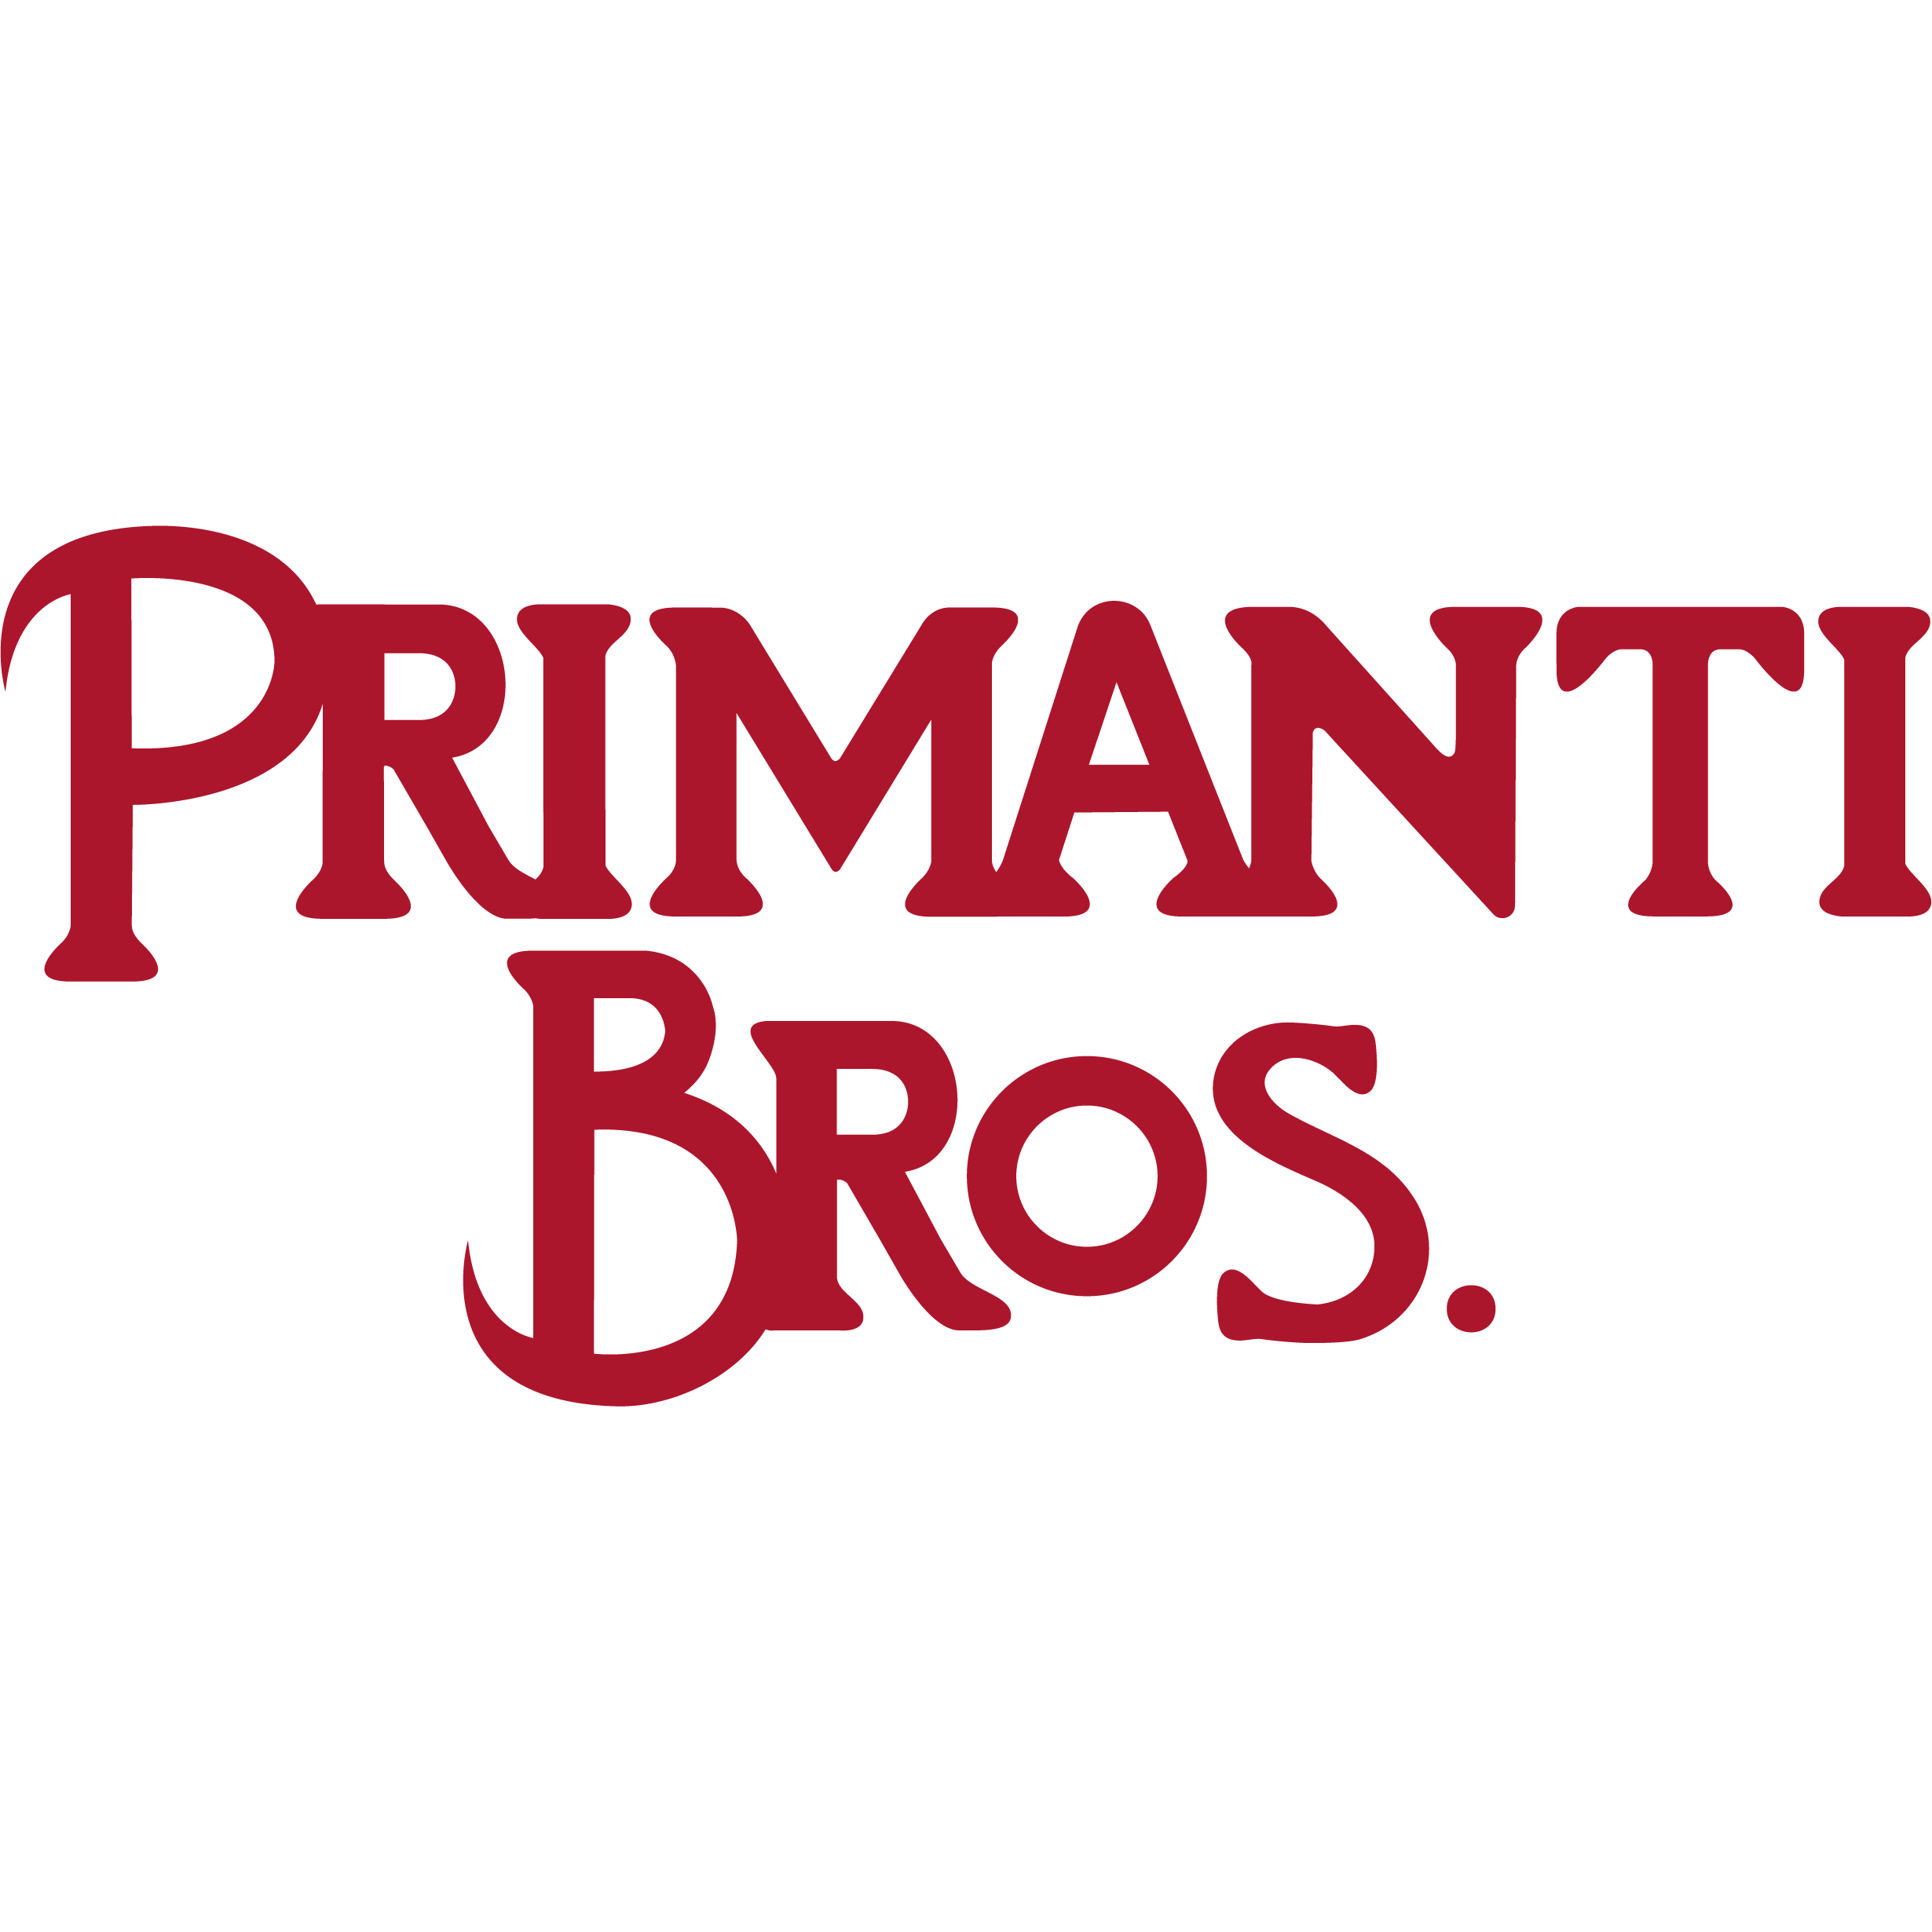 Primanti Bros. Restaurant and Bar - Indiana, PA 15701 - (724)422-8077 | ShowMeLocal.com